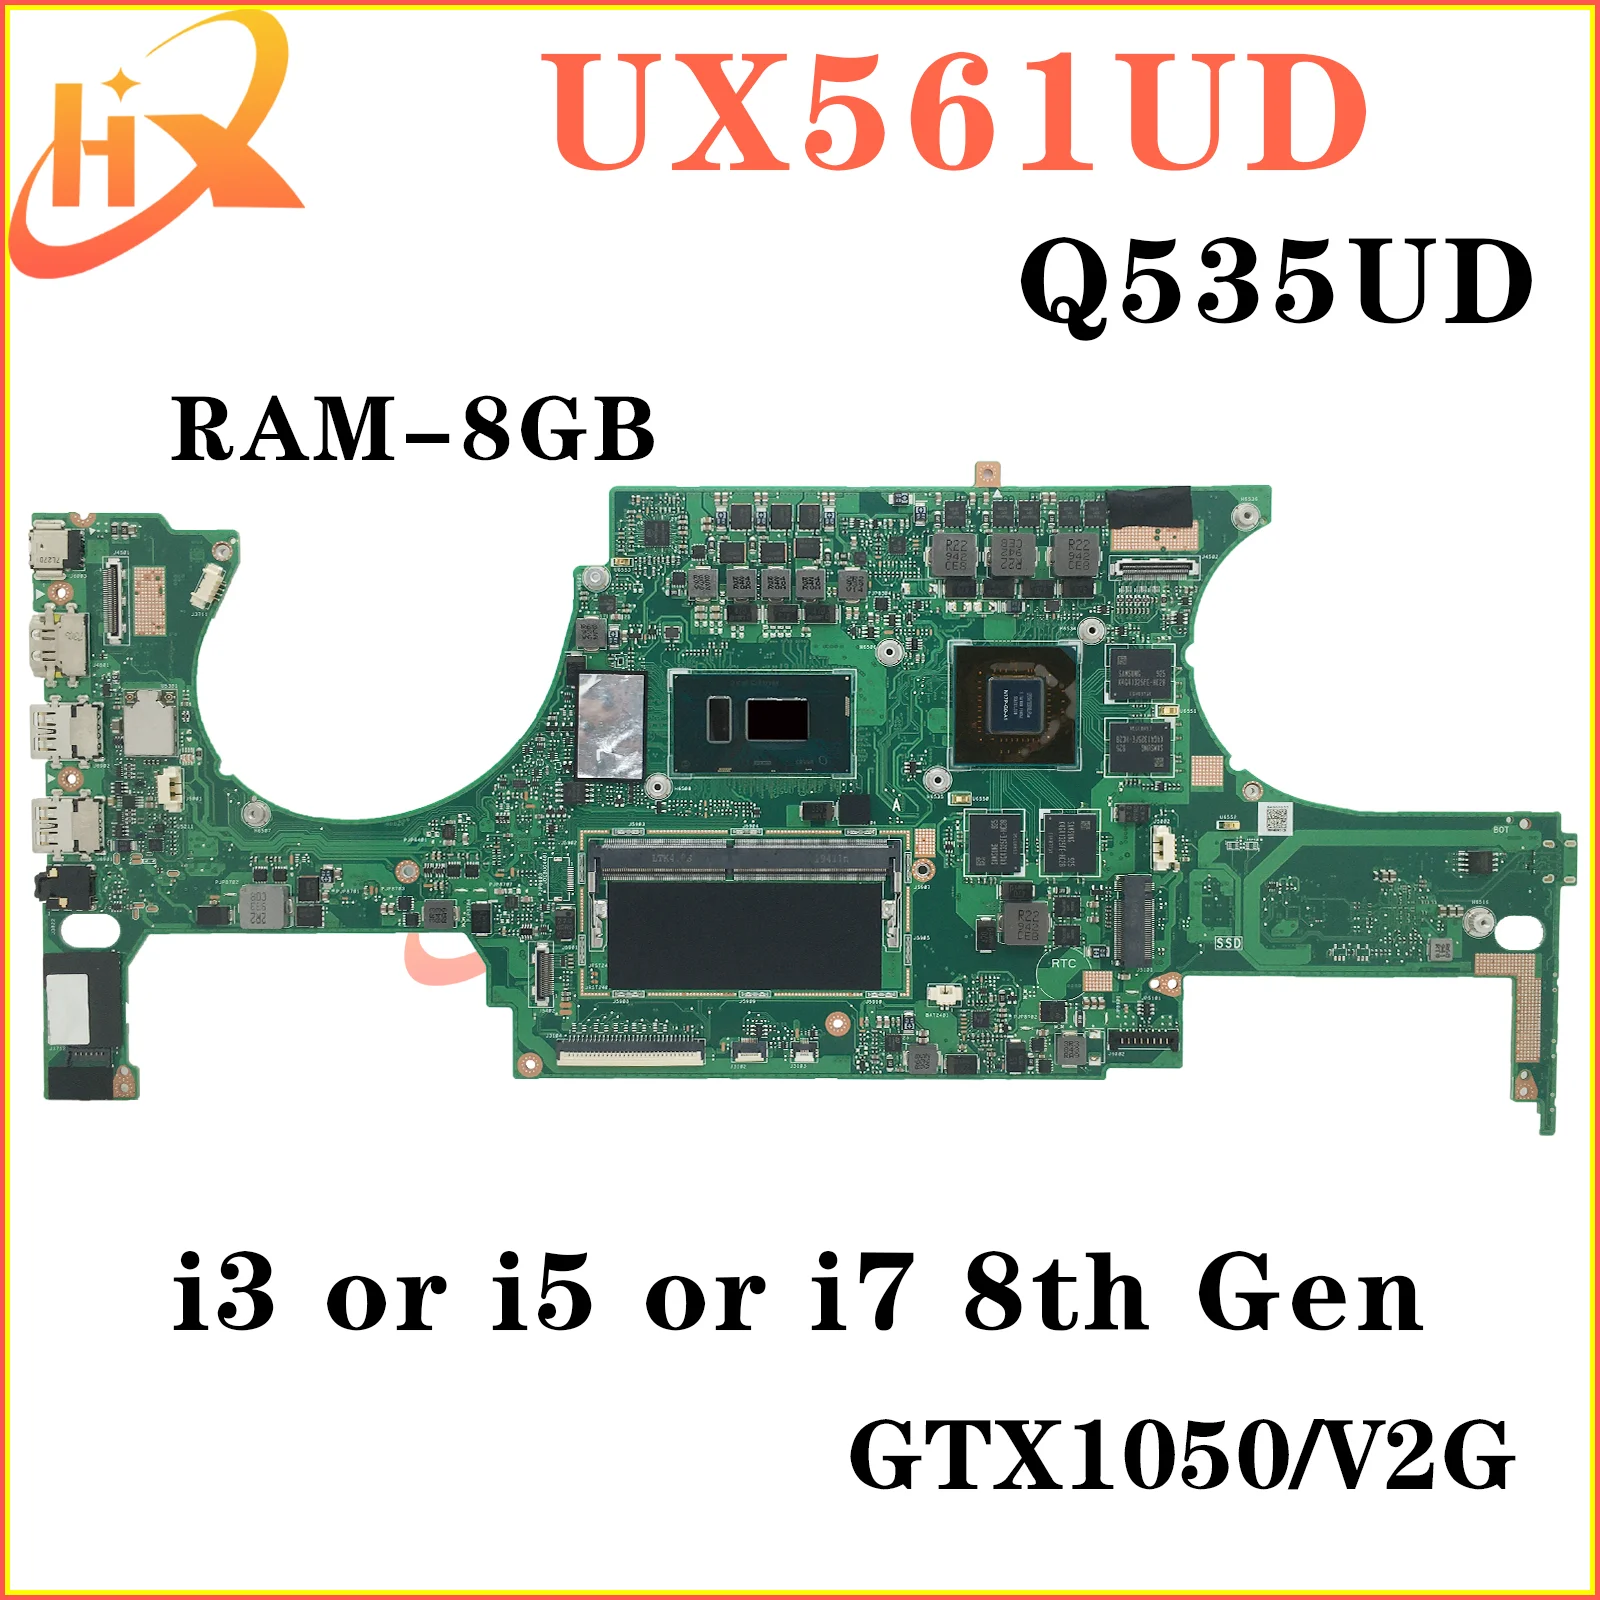 

UX561UD Mainboard For ASUS UX561U Q535UD Q535U Laptop Motherboard i3 i5 i7 8th Gen RAM-8GB GTX1050/V2G